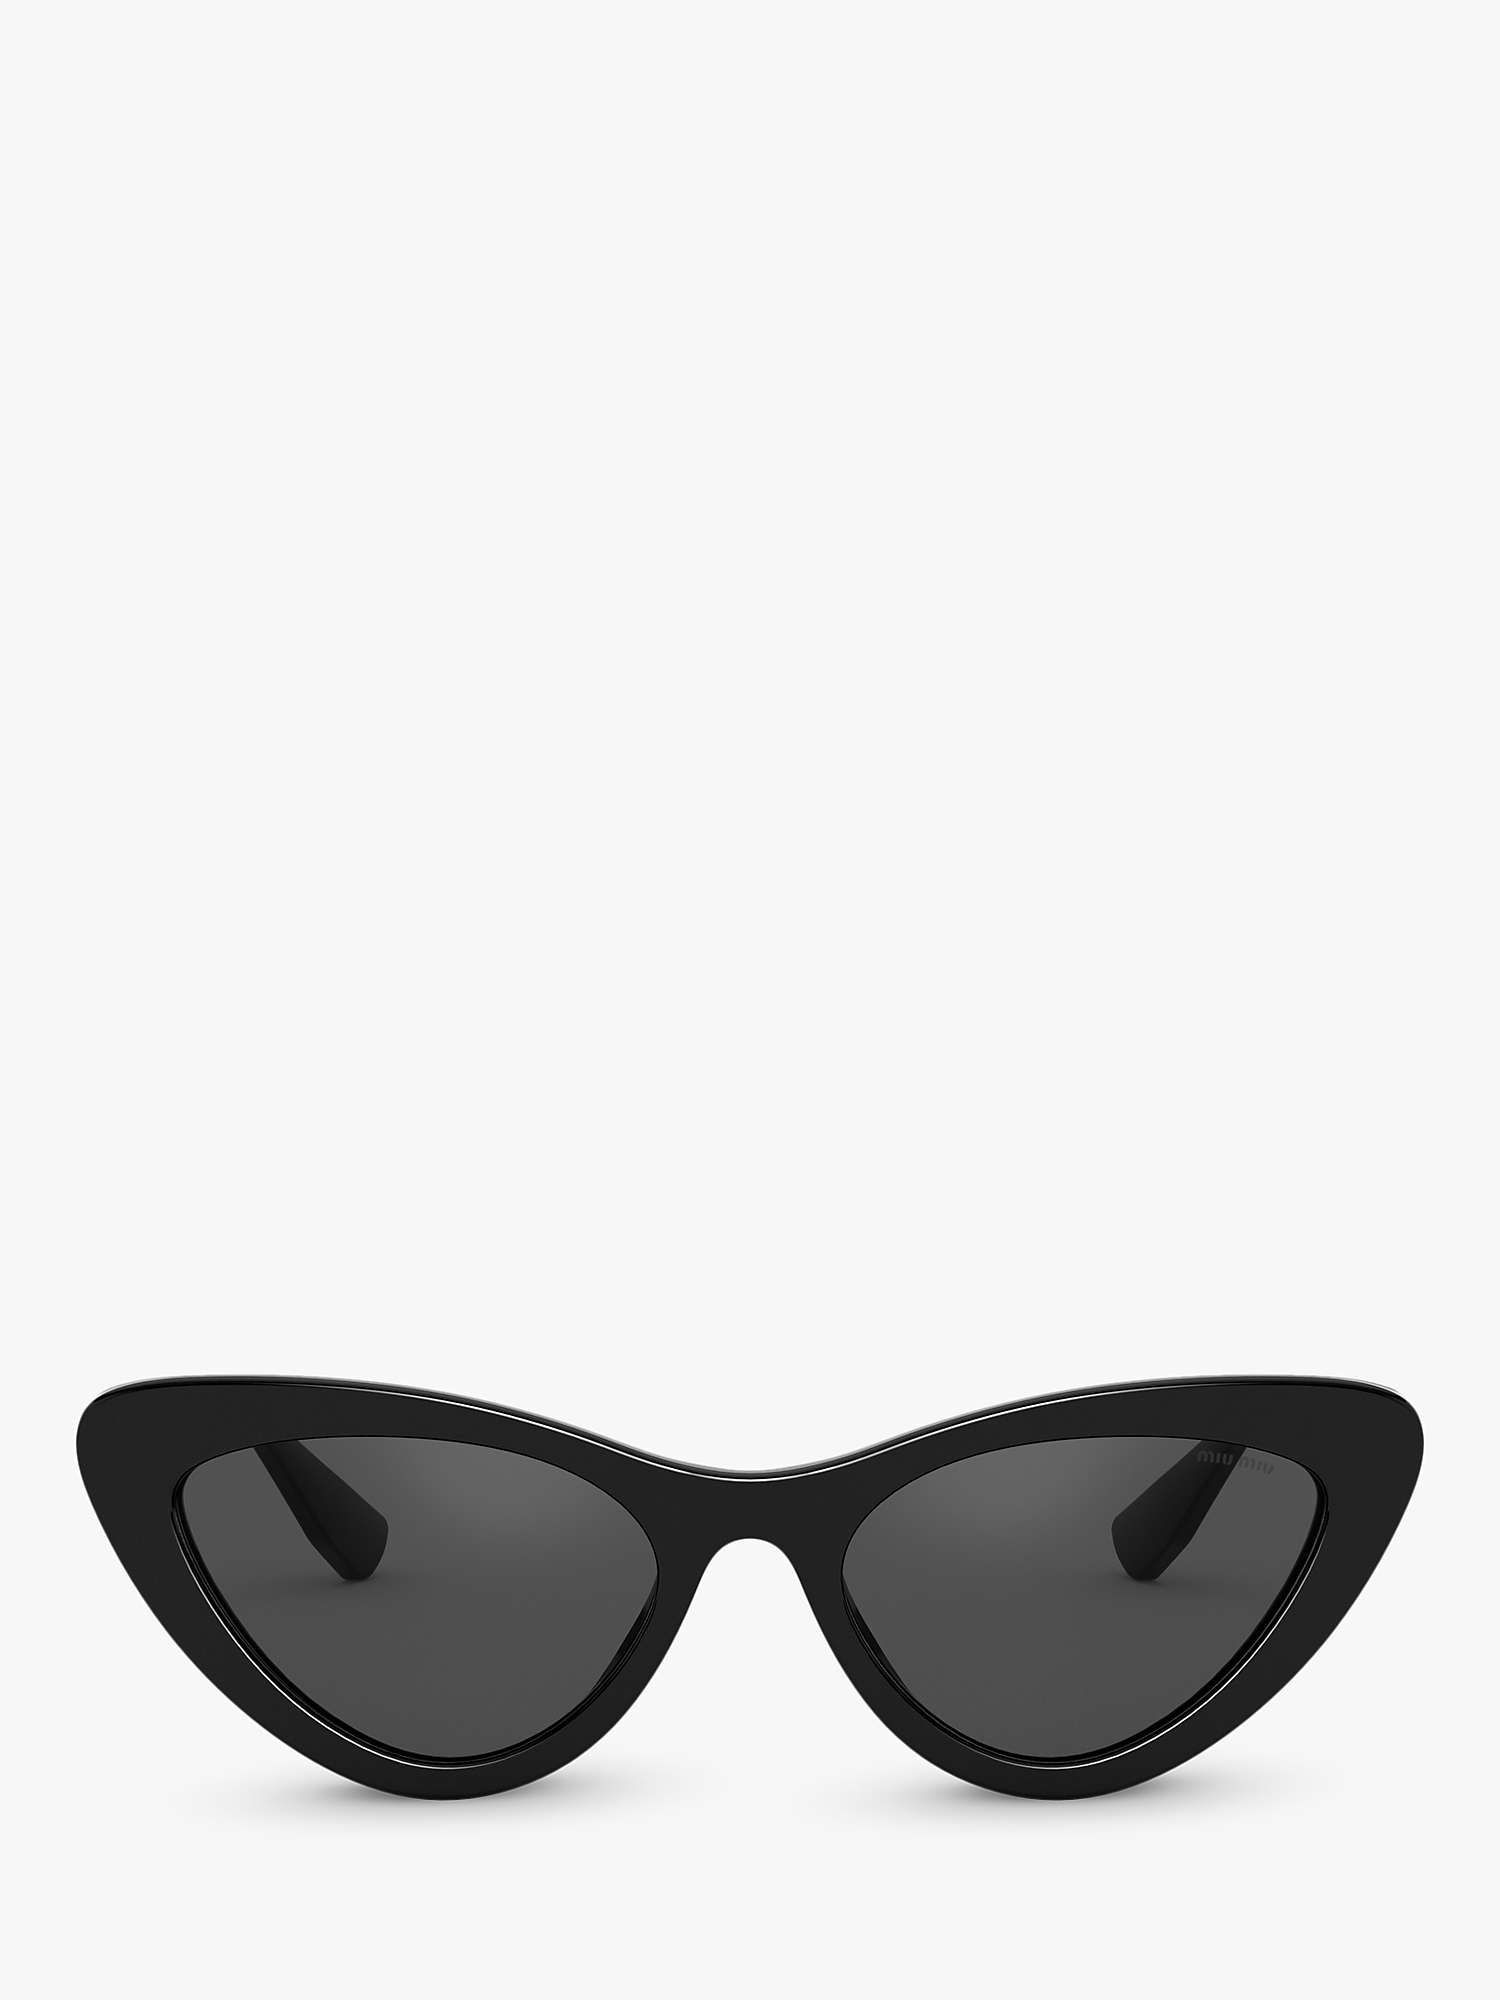 Buy Miu Miu MU 01VS Women's Butterfly Sunglasses Online at johnlewis.com